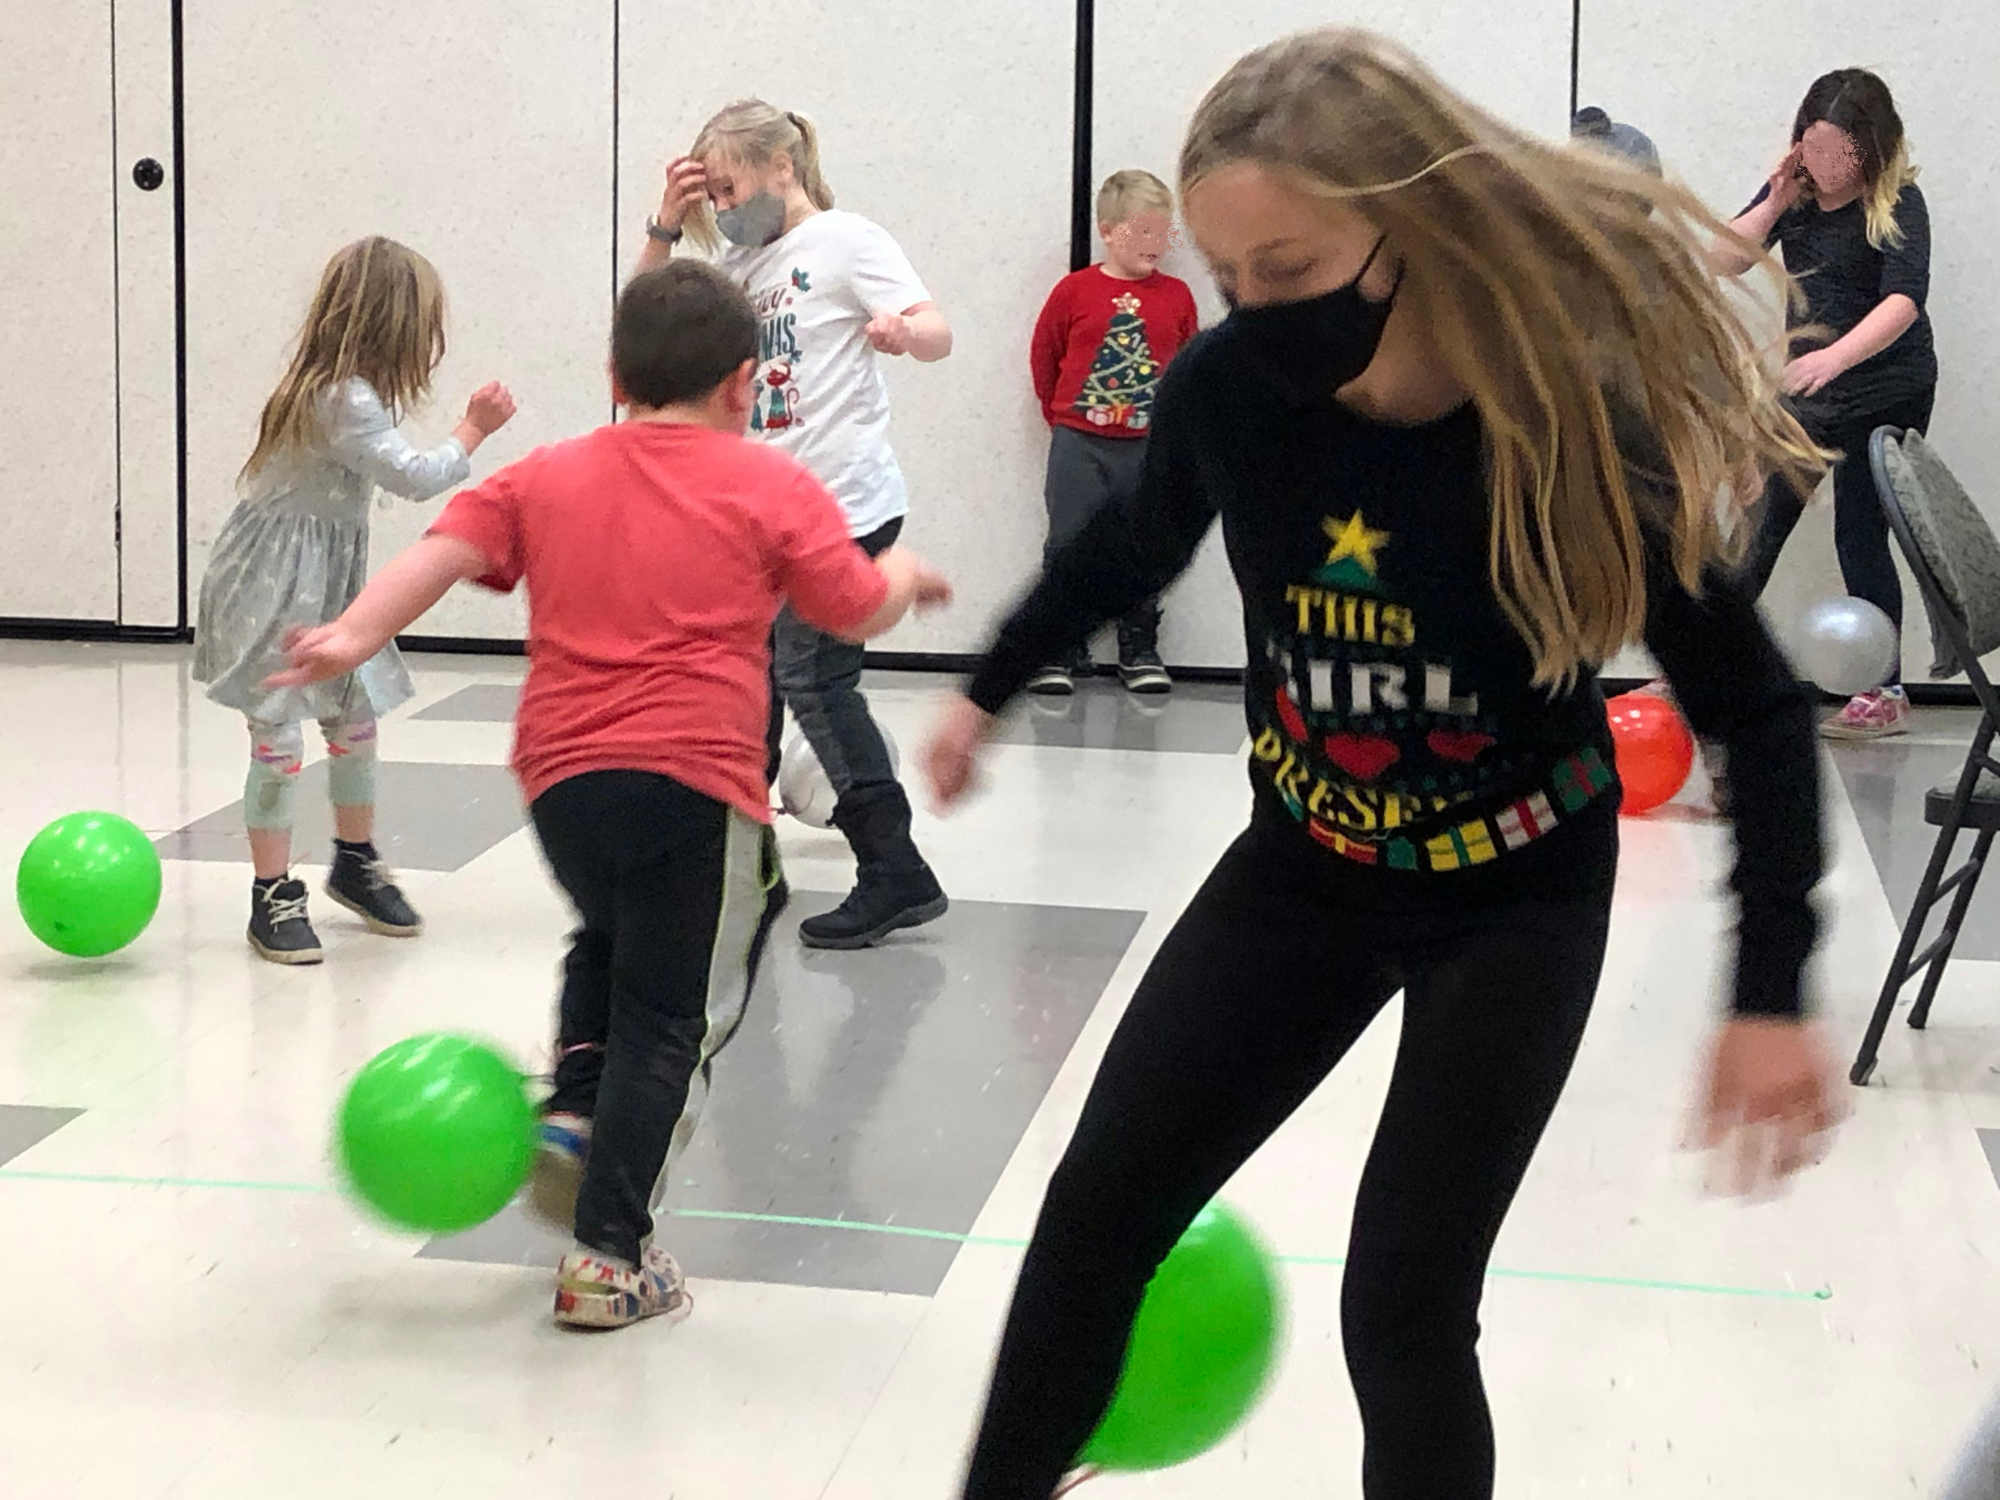 youth kick around green and red balls